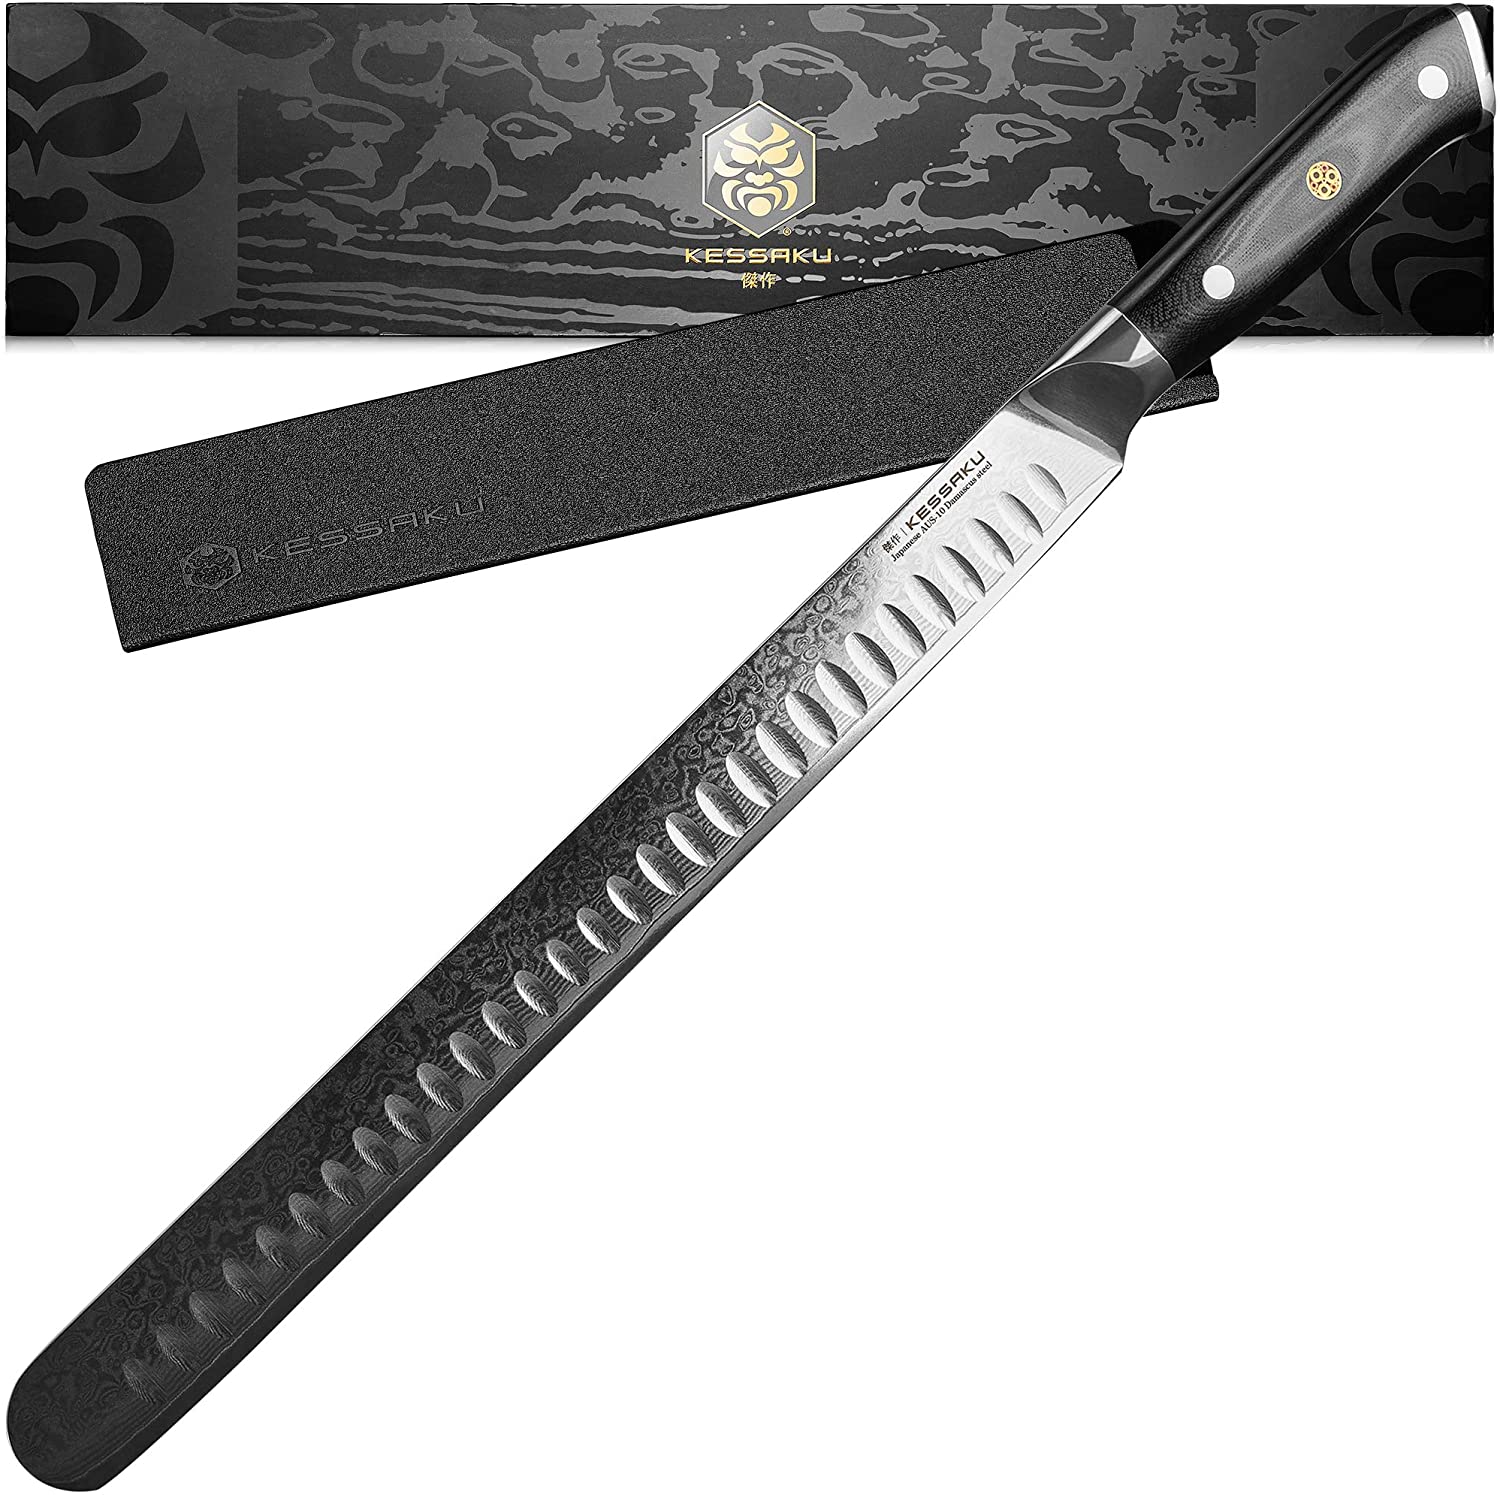 Kessaku Meat Cleaver Butcher Knife - 7 inch - Damascus Dynasty Series -  Razor Sharp - AUS-10V Stainless Steel 